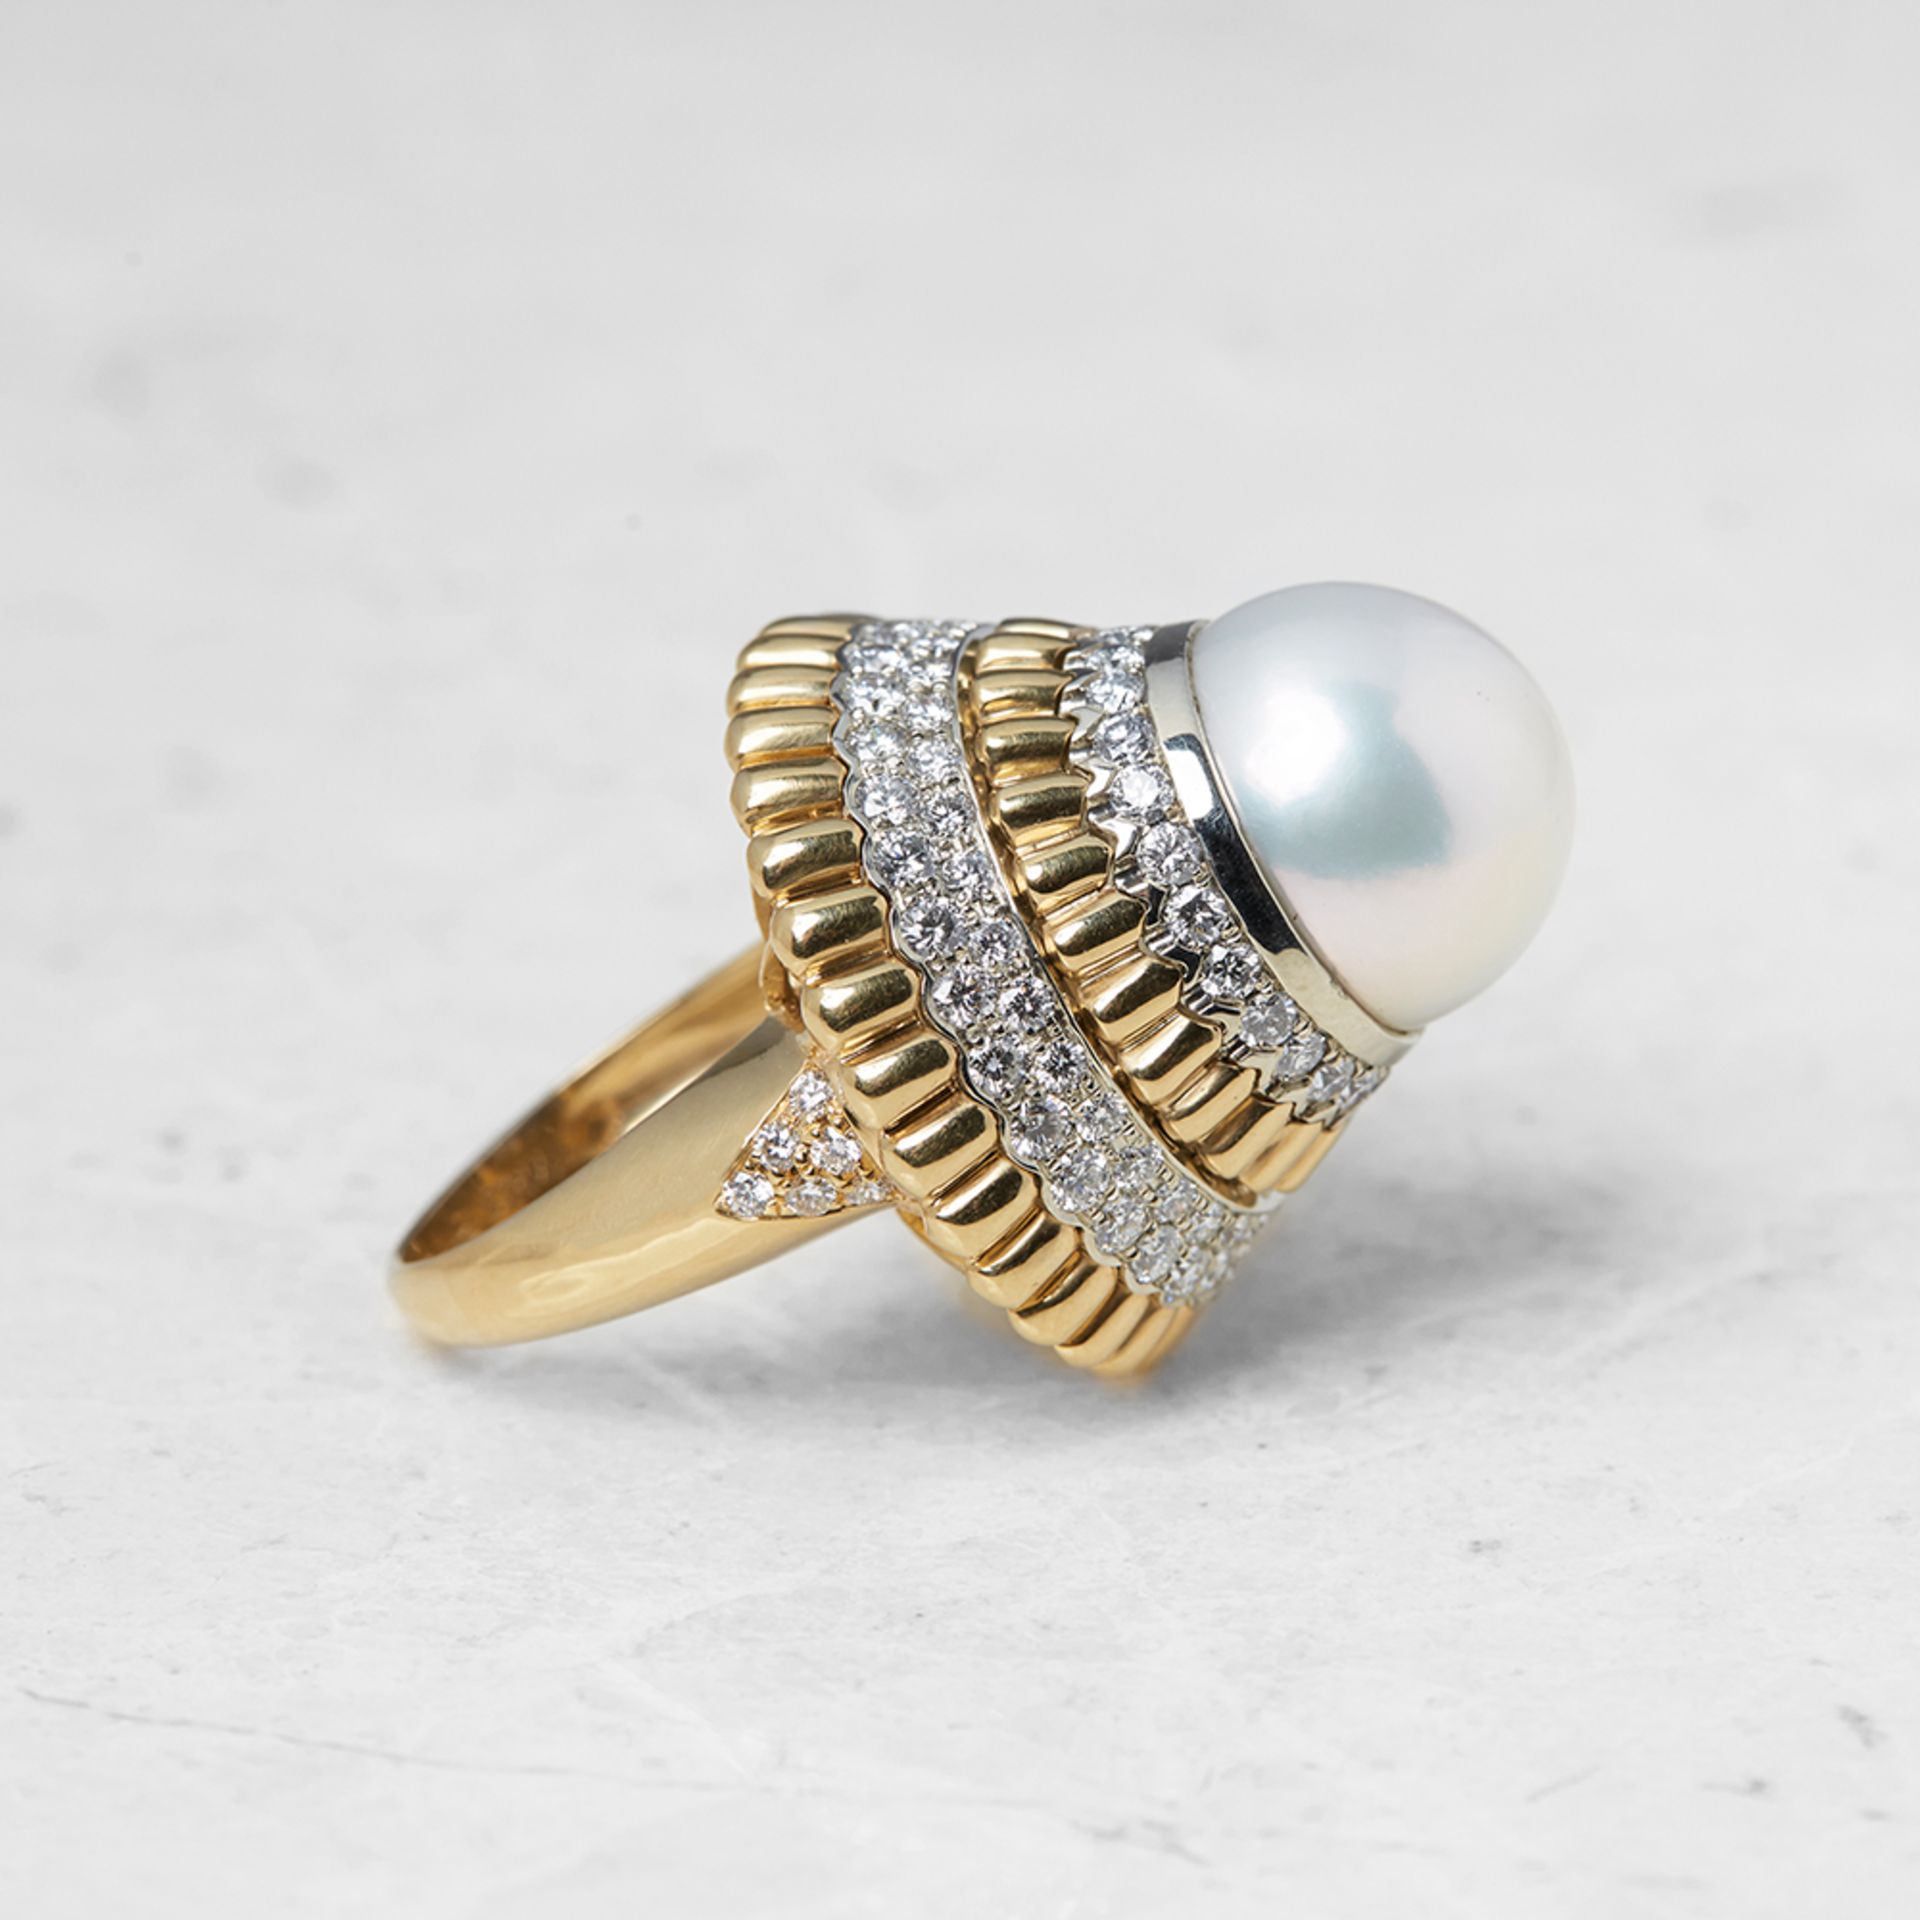 Van Cleef & Arpels 18k Yellow Gold Pearl & Diamond Ring - Image 12 of 28